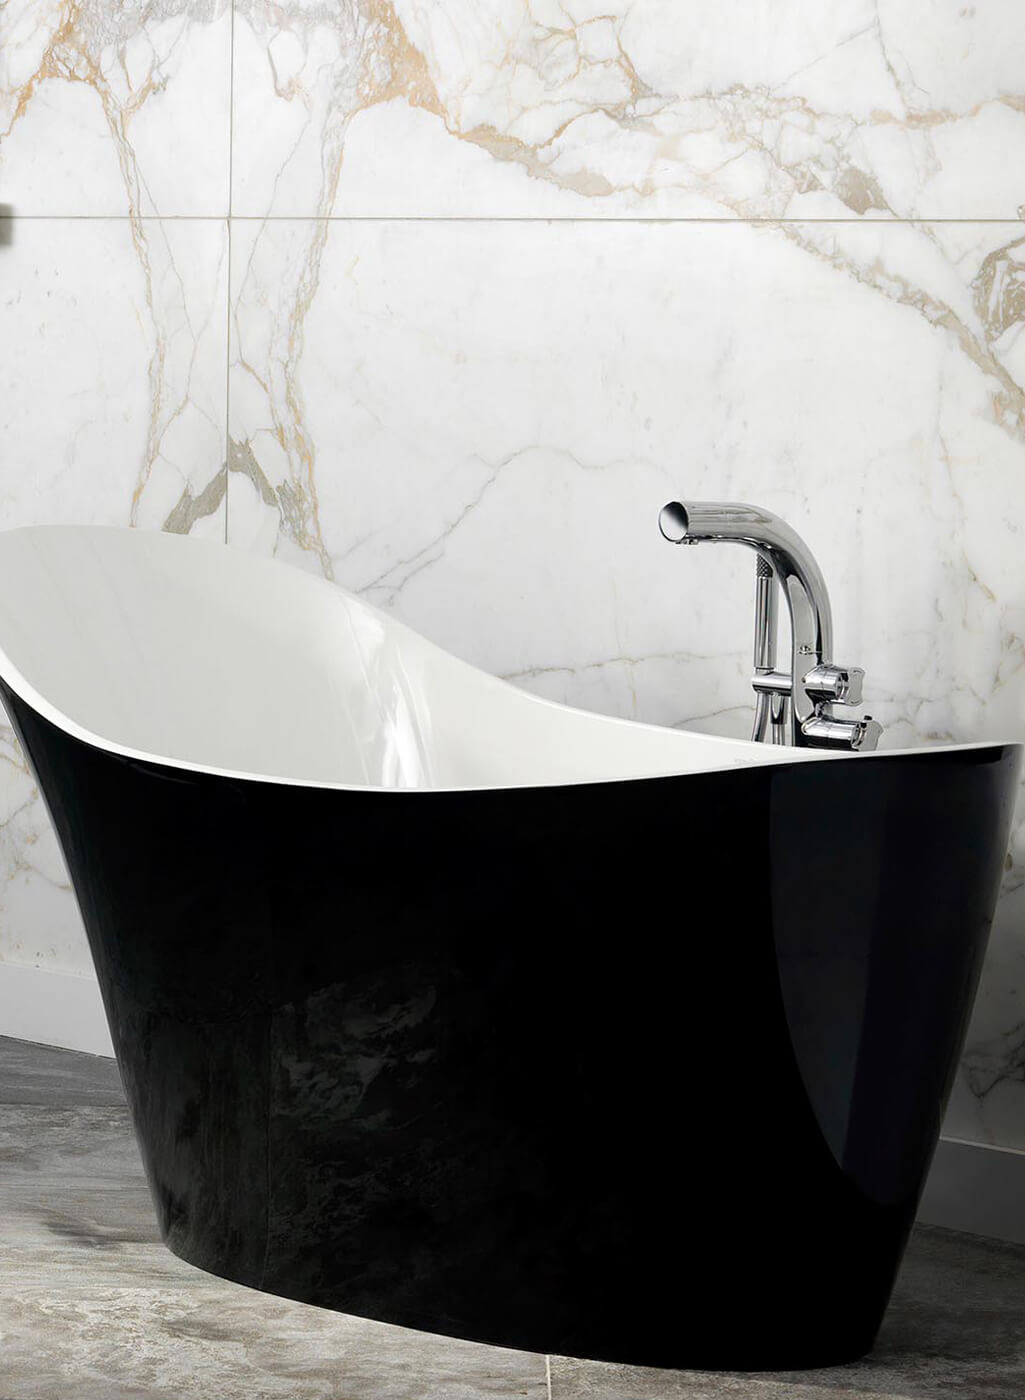 Top 3 Bathroom Design Ideas and Trends